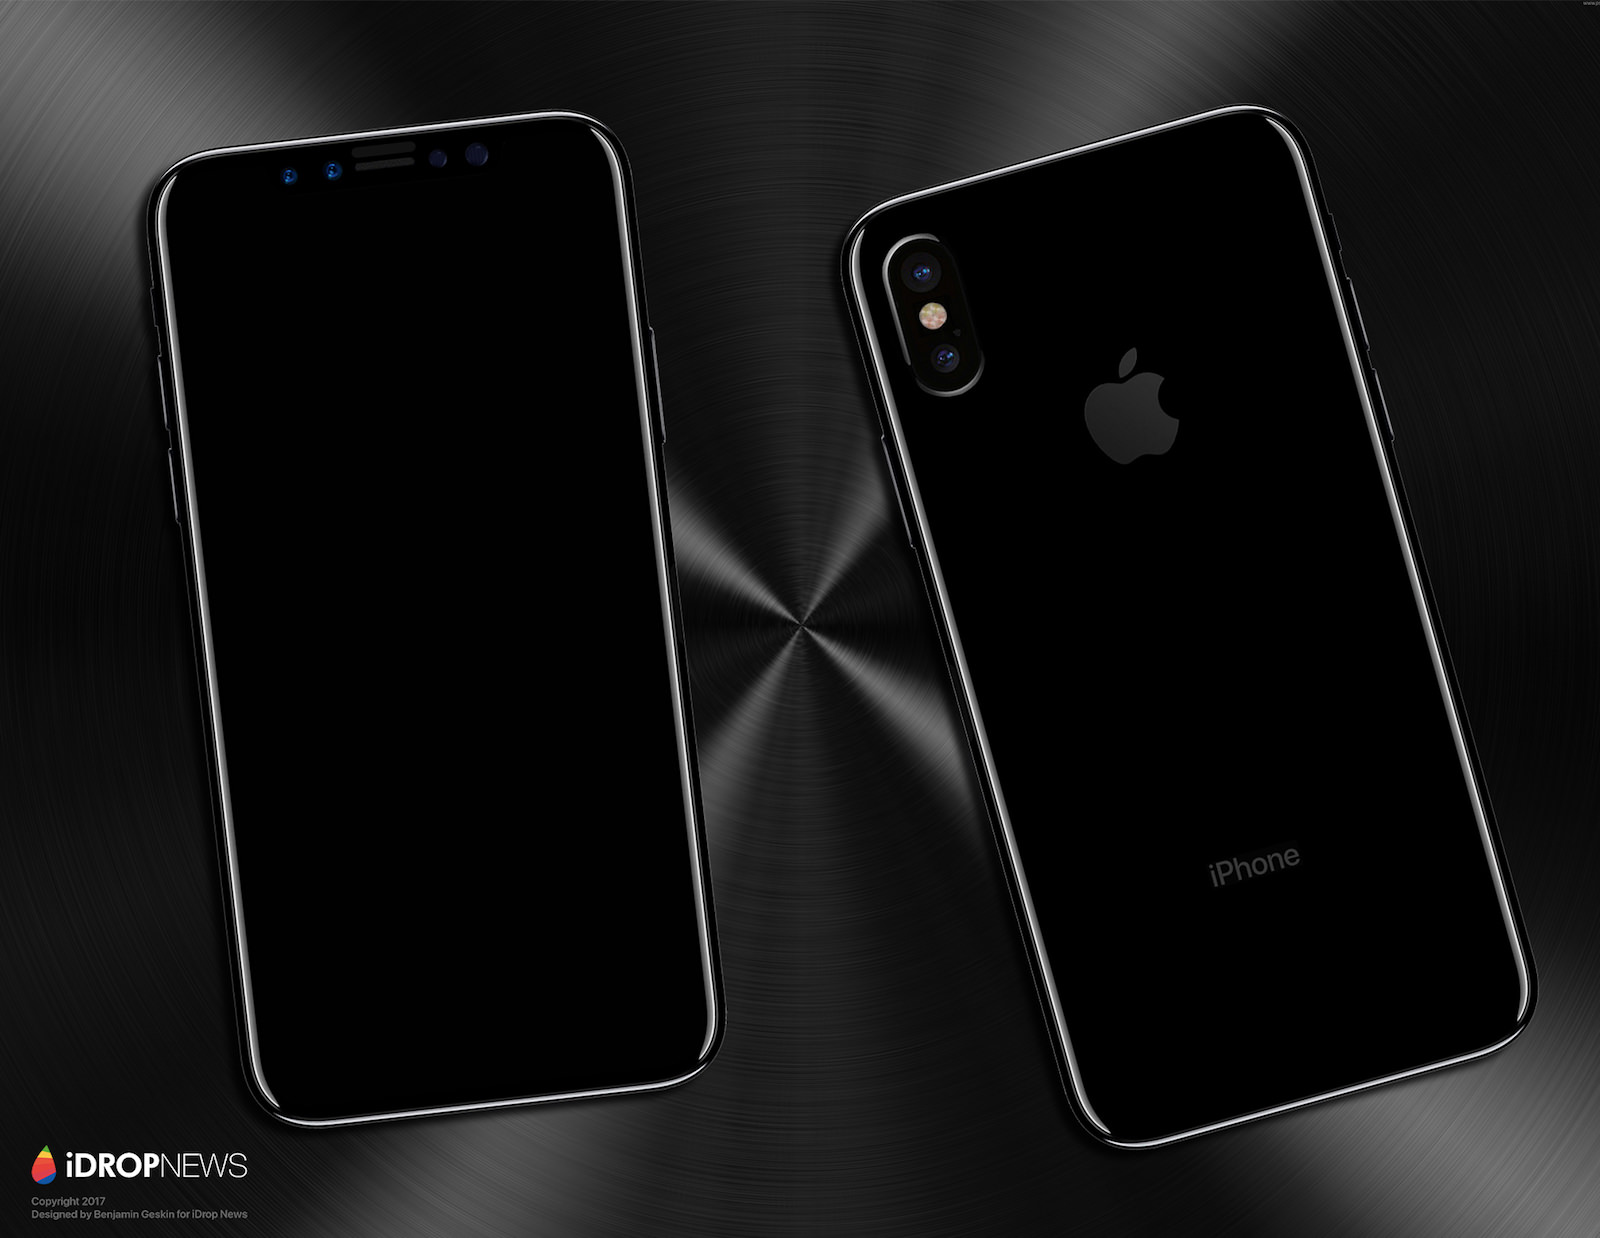 iPhone-8-Size-Comparison-iDrop-News-11.jpg